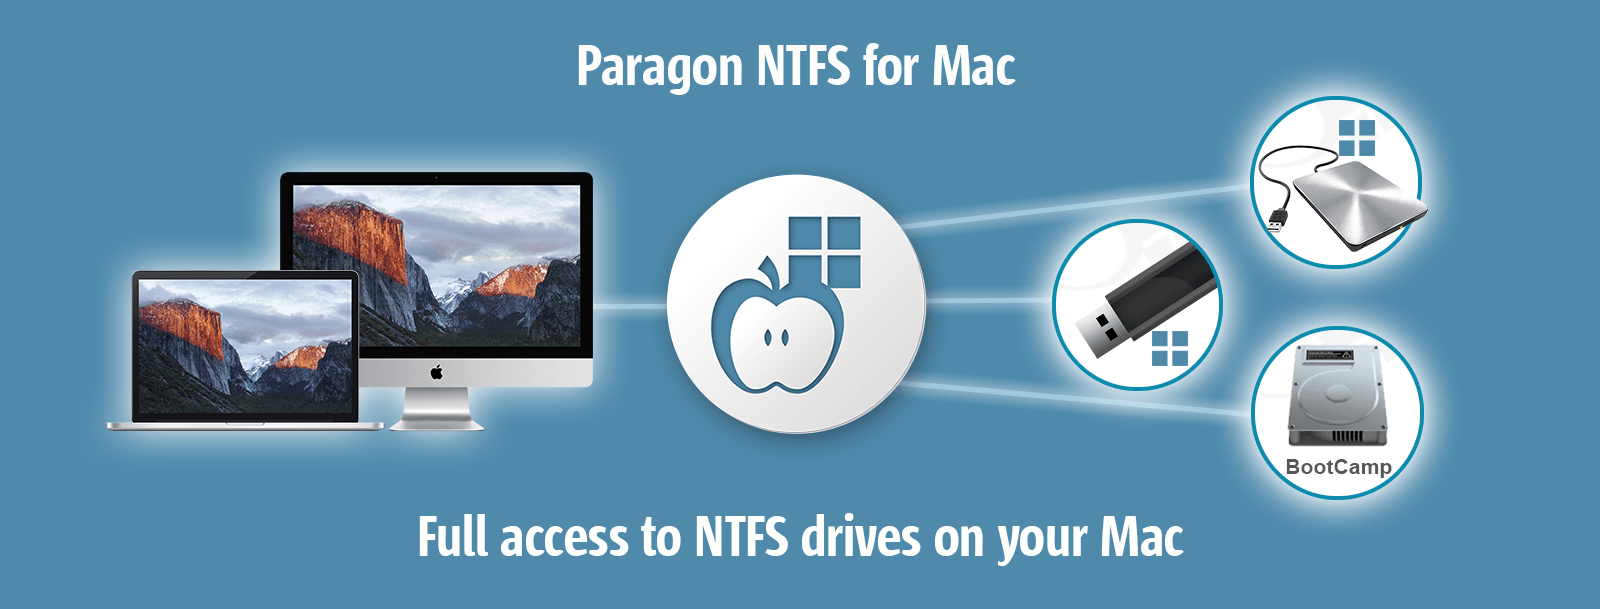 paragon ntfs for mac 2016